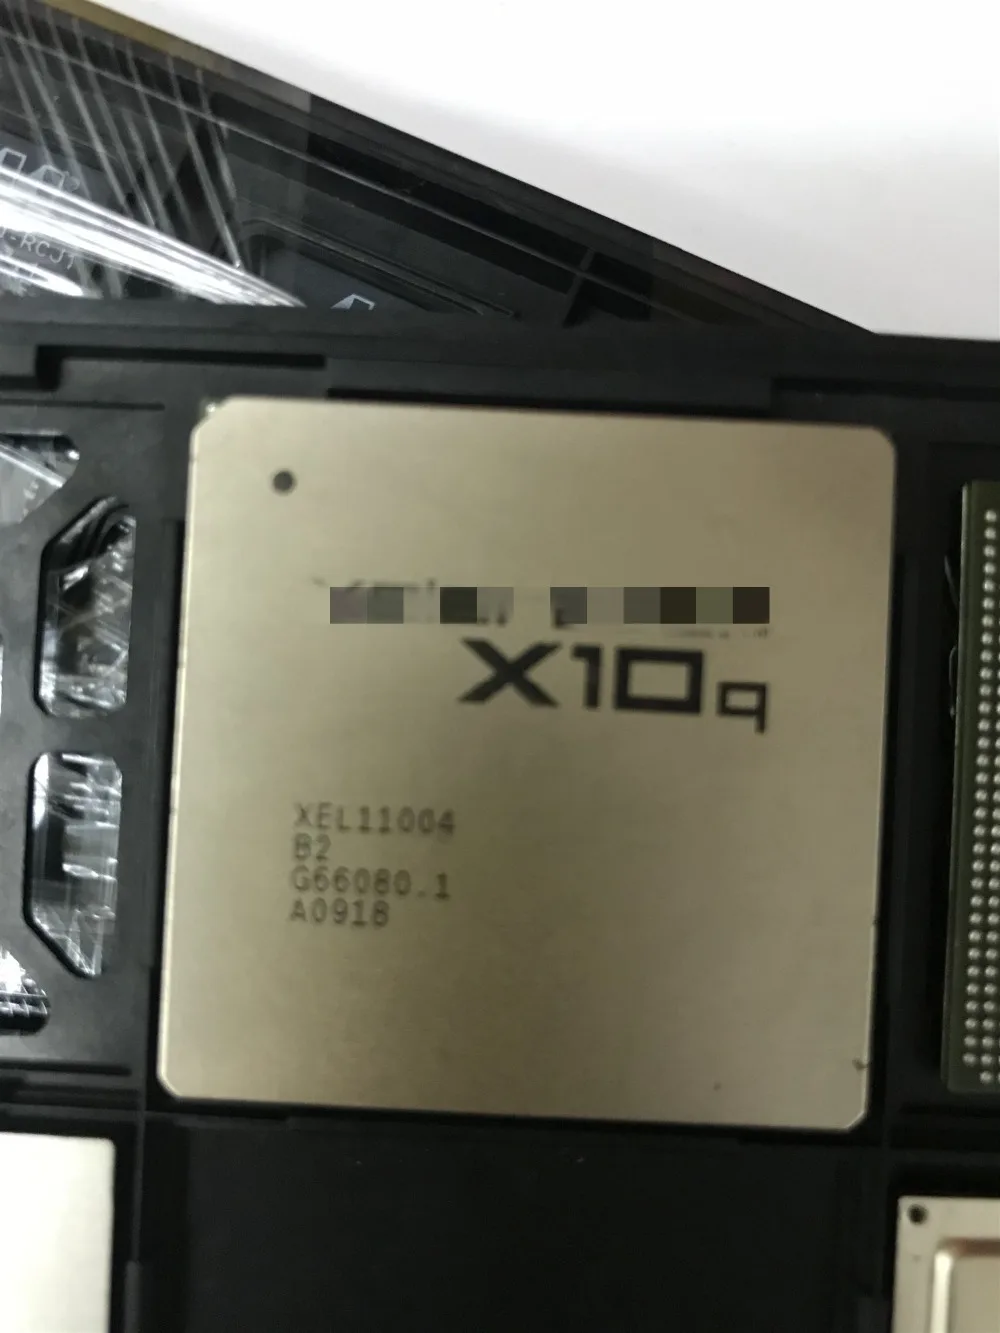 XEL11004-b2 XEL11004  chips X10Q chips BGA XEL11004 Electronic components chip IC